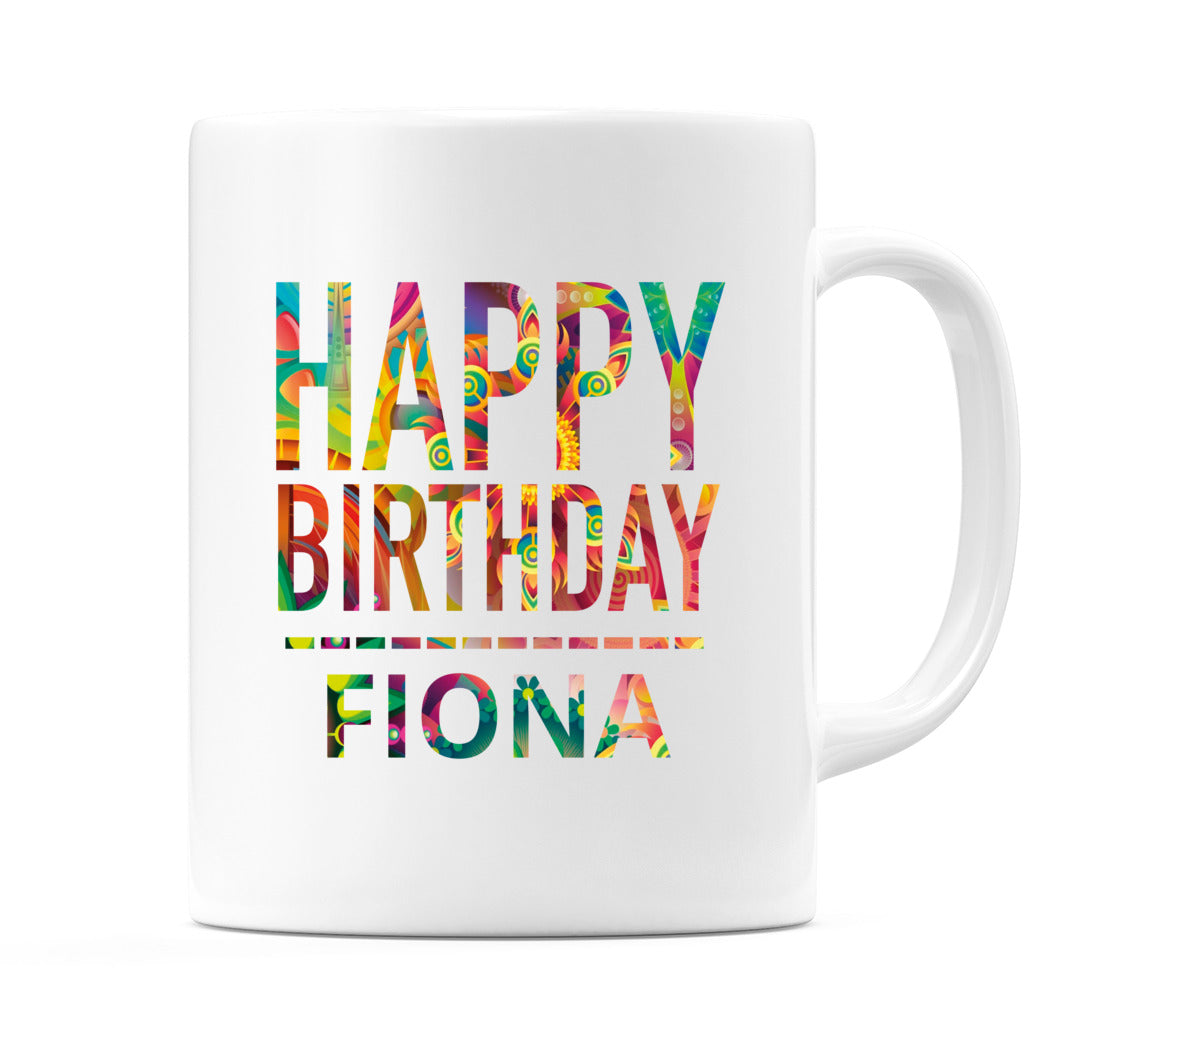 Happy Birthday Fiona (Tie Dye Effect) Mug Cup by WeDoMugs